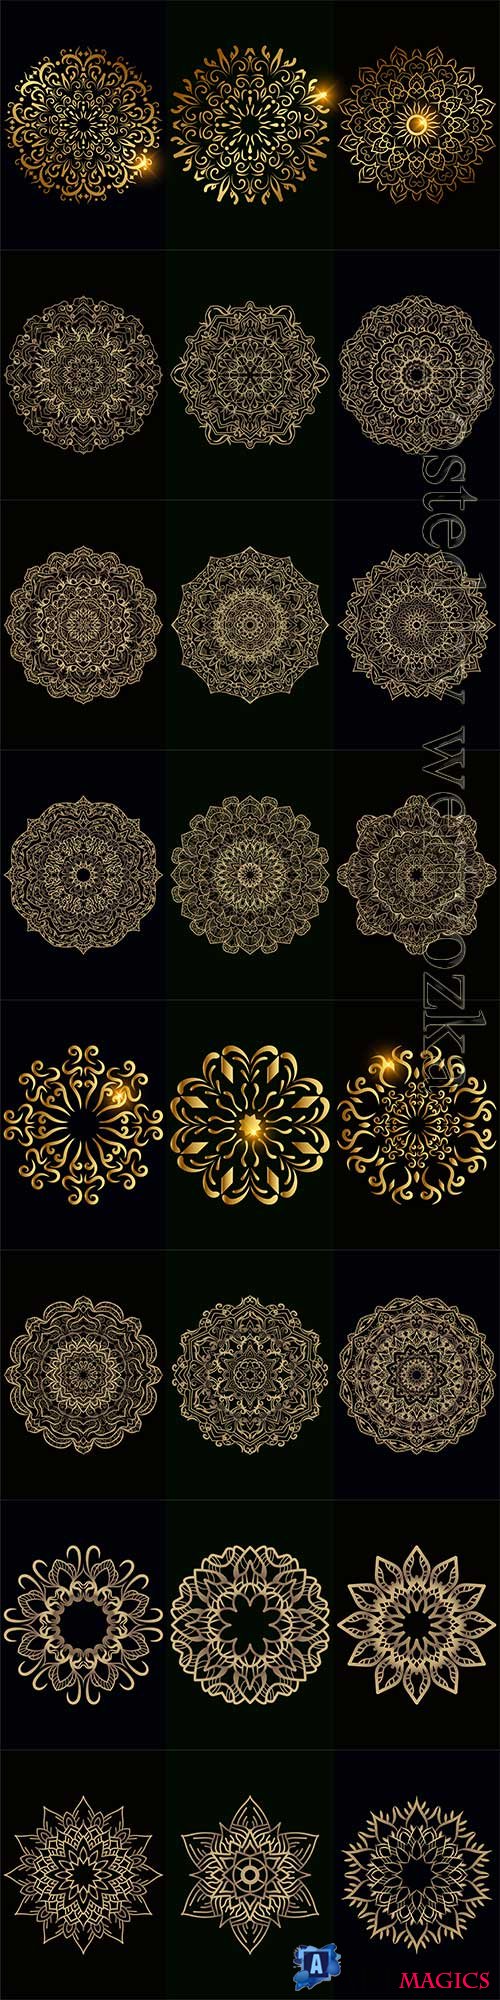 Mandala ornament or flower background design set